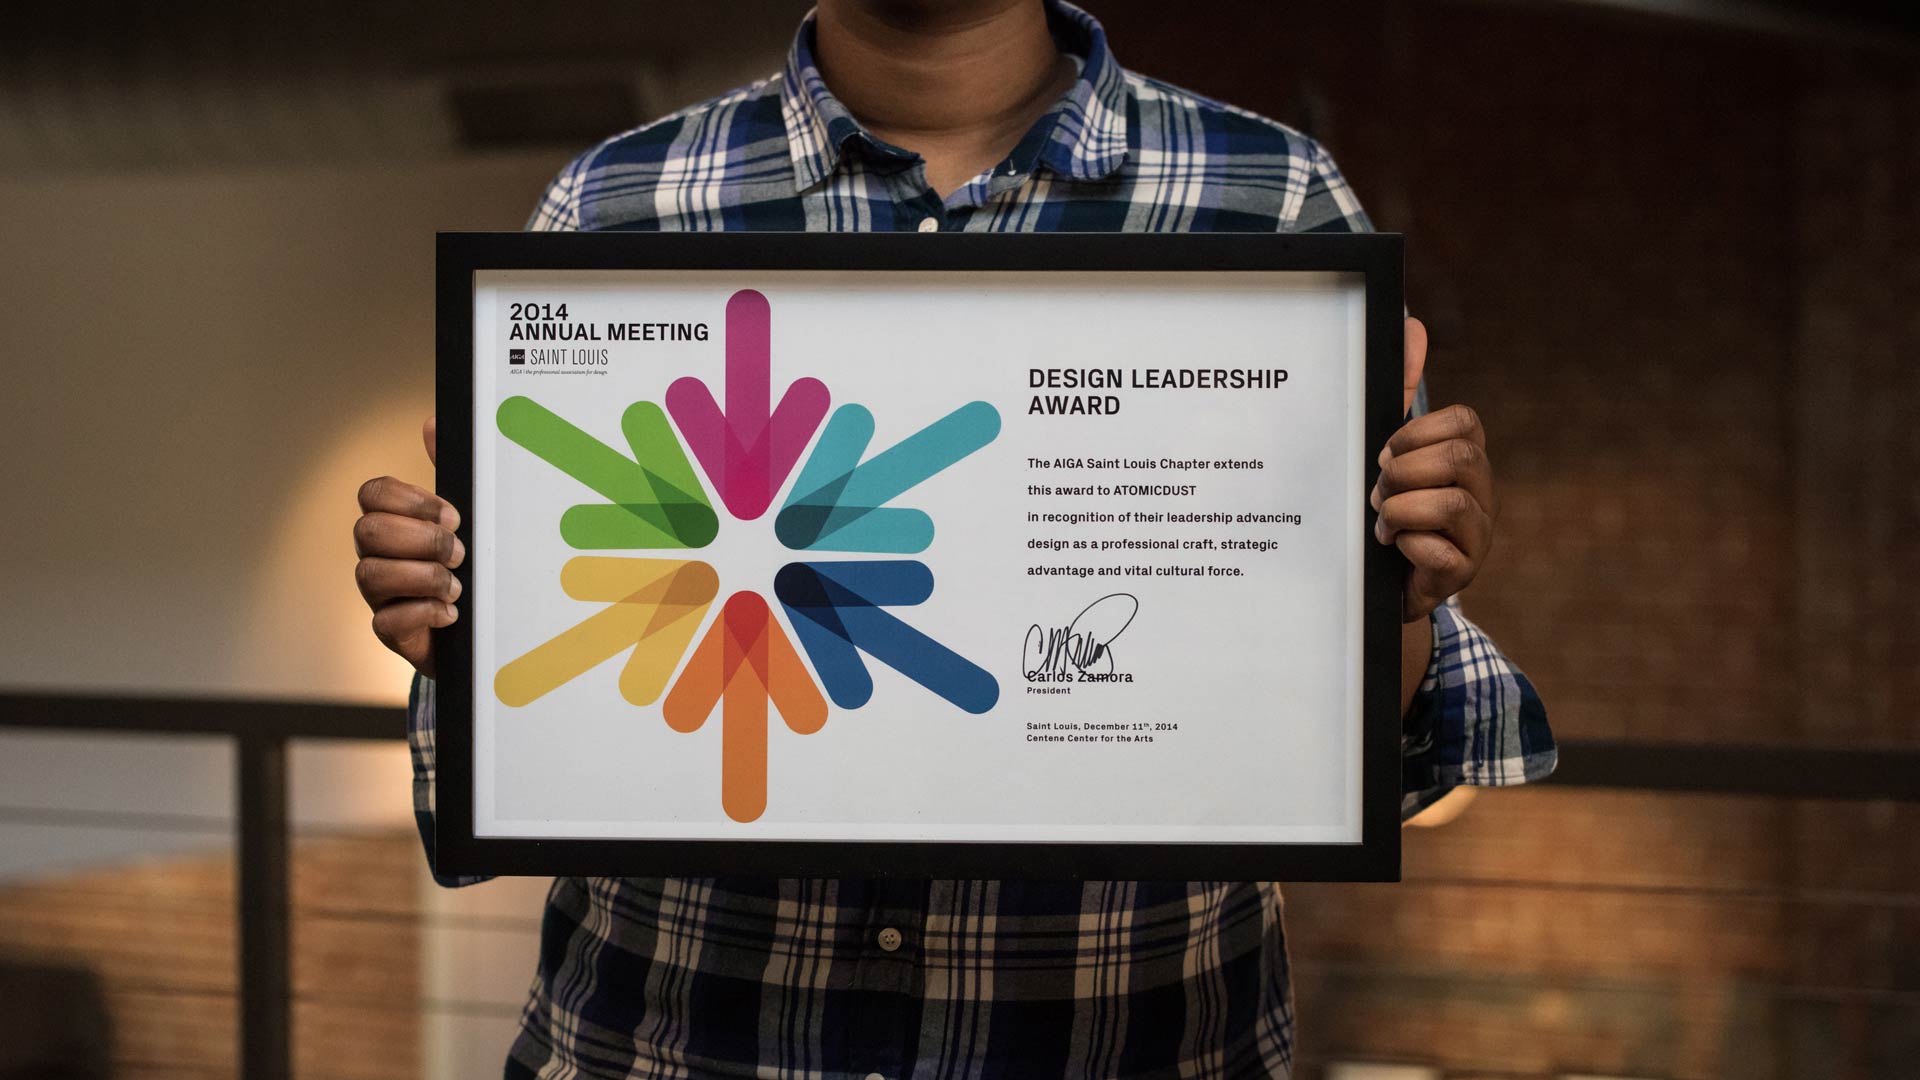 Atomicdust holding up a framed AIGA Design Leadership Award